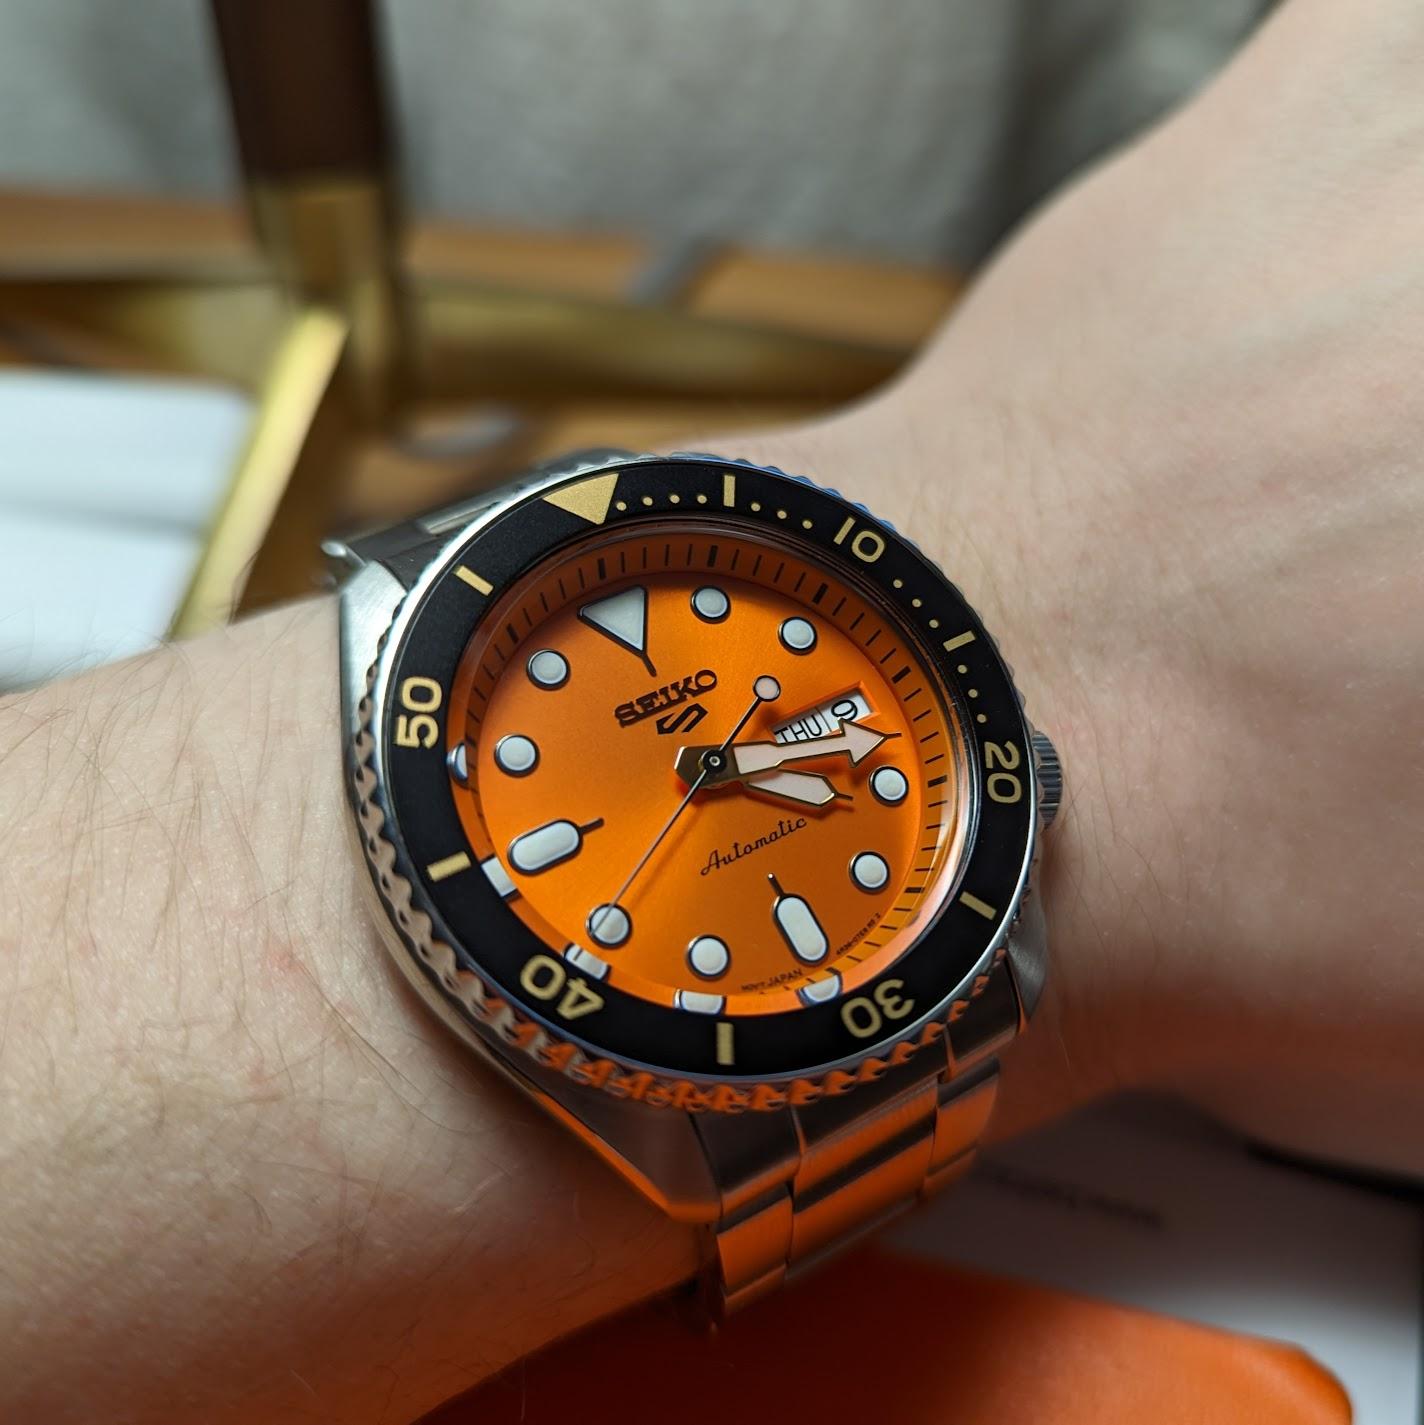 Seiko 5 Sports Automatic 24-Jewel Watch with Orange Dial #SRPD59